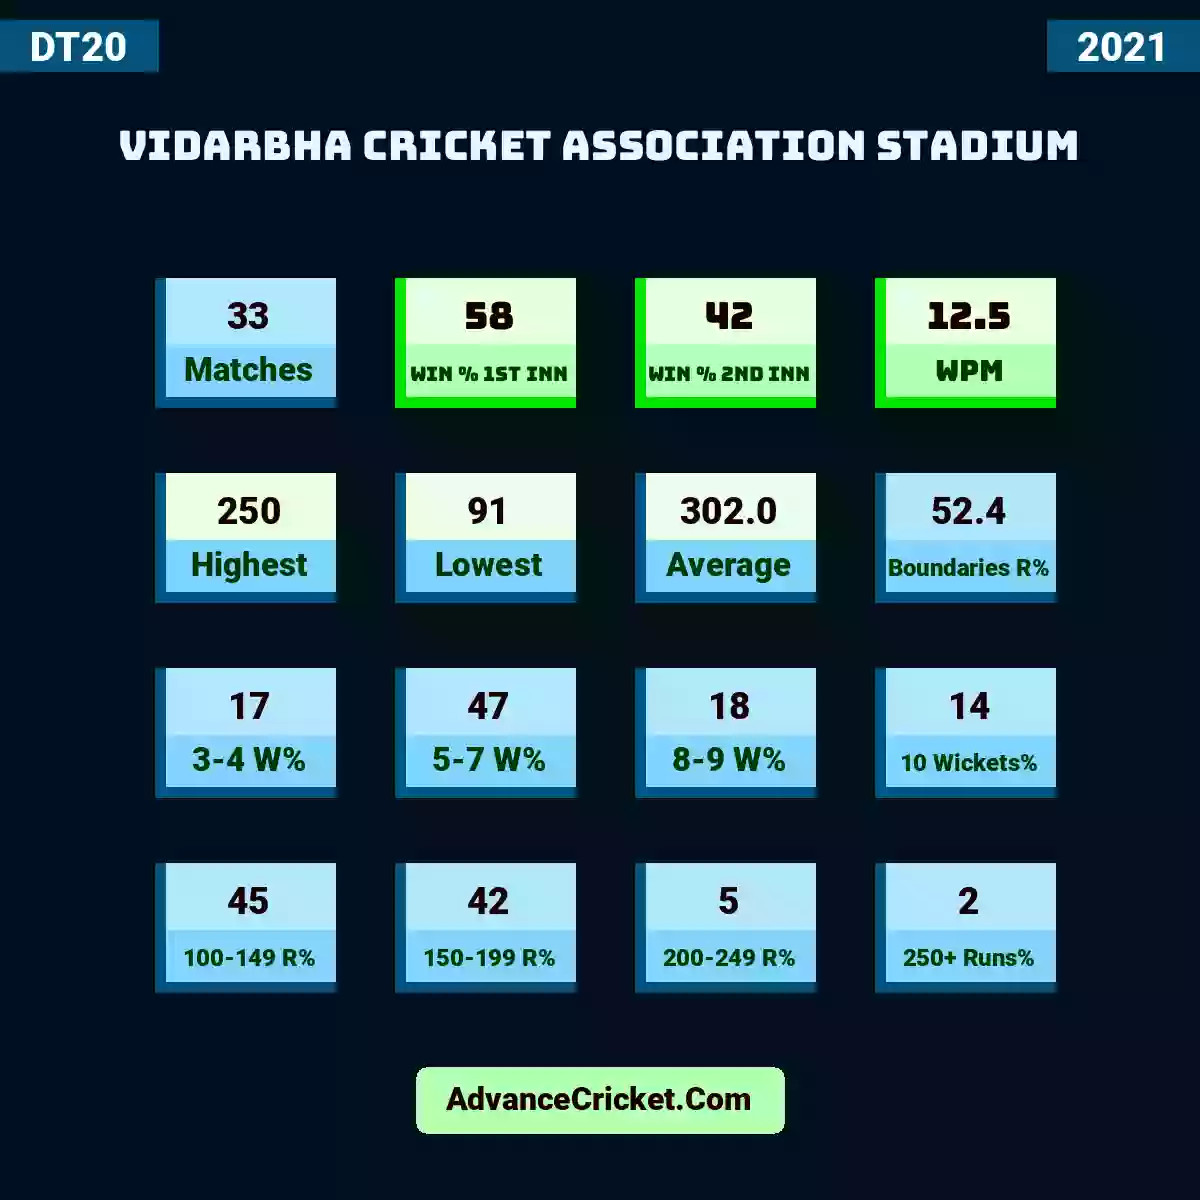 Image showing Vidarbha Cricket Association Stadium with Matches: 33, Win % 1st Inn: 58, Win % 2nd Inn: 42, WPM: 12.5, Highest: 250, Lowest: 91, Average: 302.0, Boundaries R%: 52.4, 3-4 W%: 17, 5-7 W%: 47, 8-9 W%: 18, 10 Wickets%: 14, 100-149 R%: 45, 150-199 R%: 42, 200-249 R%: 5, 250+ Runs%: 2.